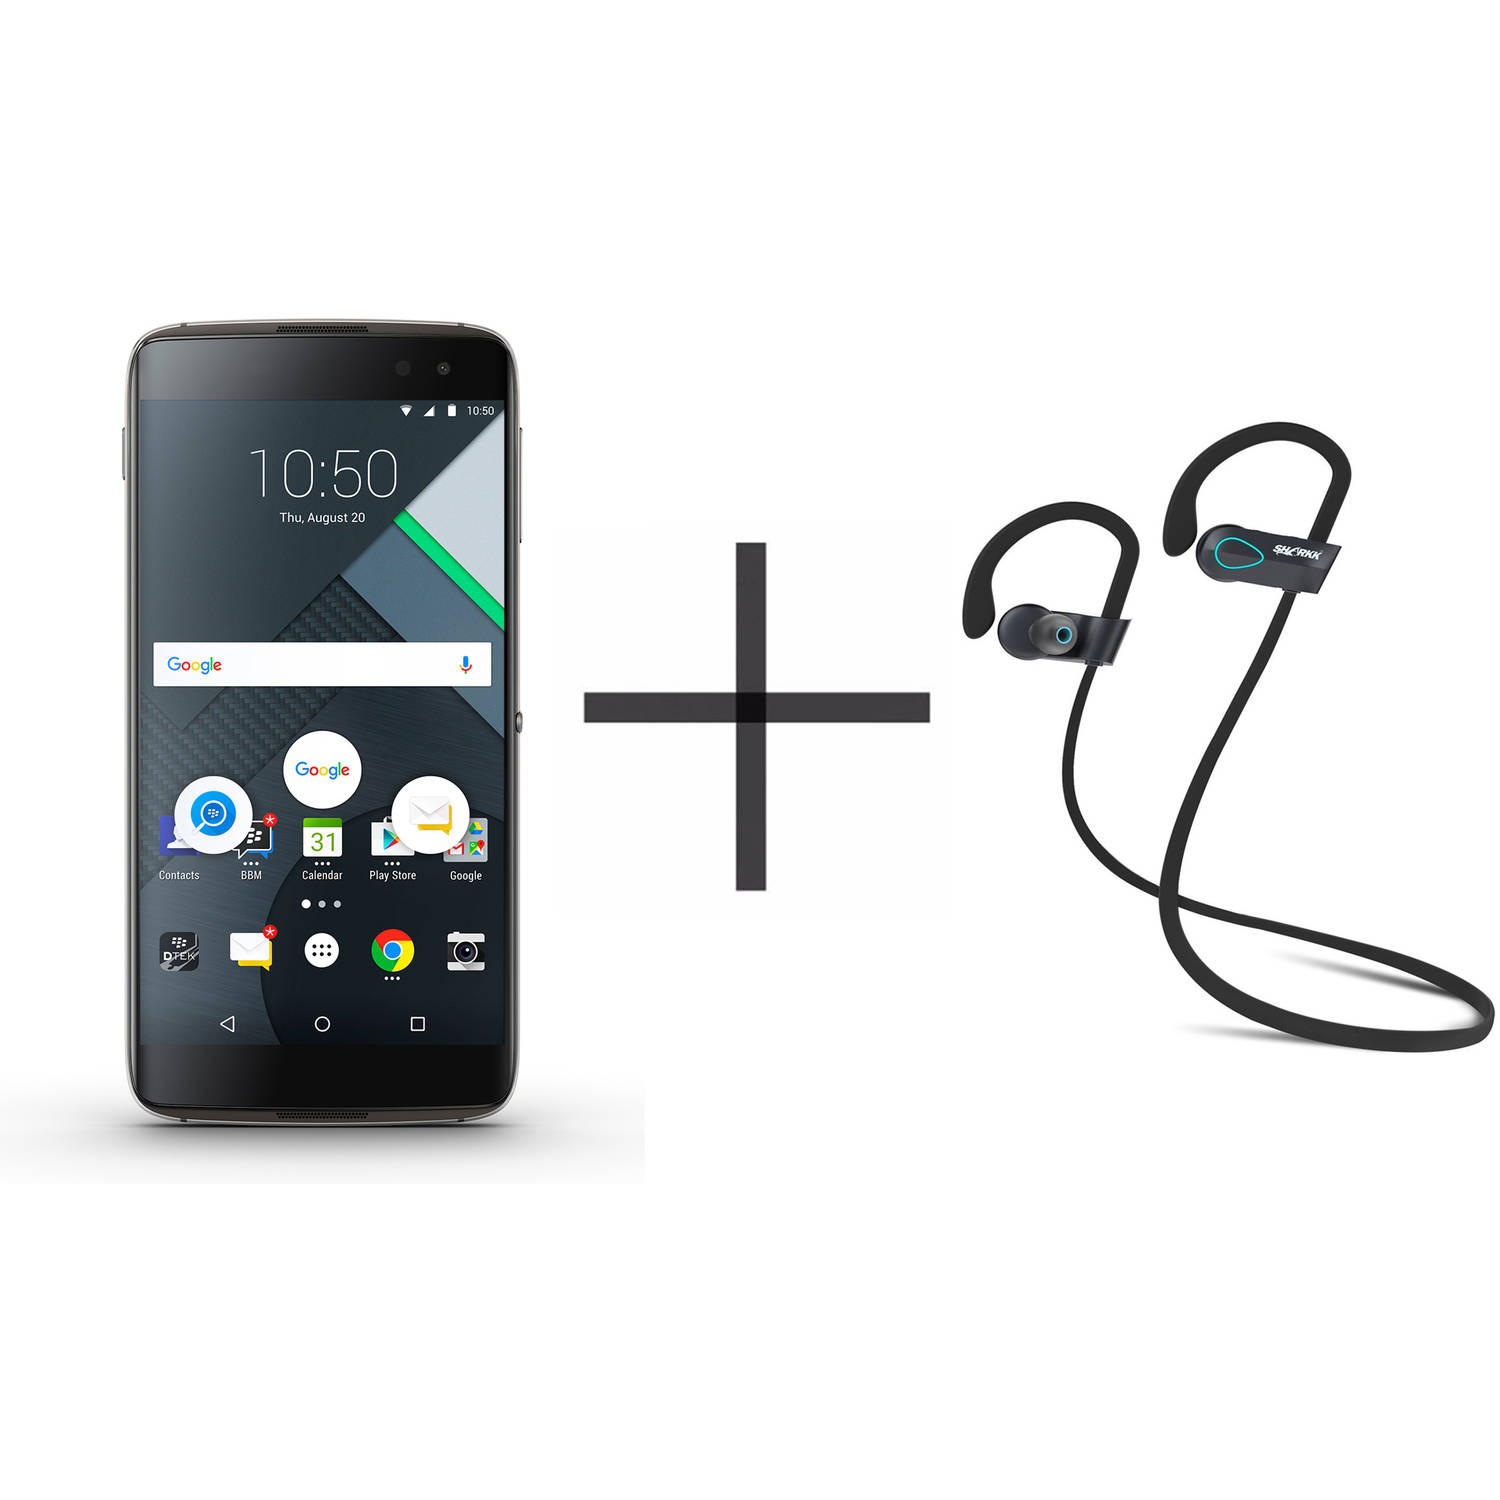 BlackBerry DTEK60 Unlocked GSM Smartphone and SHARKK Flex 20 Wireless Bluetooth Waterproof Headphones with Mic, Black (Value Bundle) - image 1 of 16